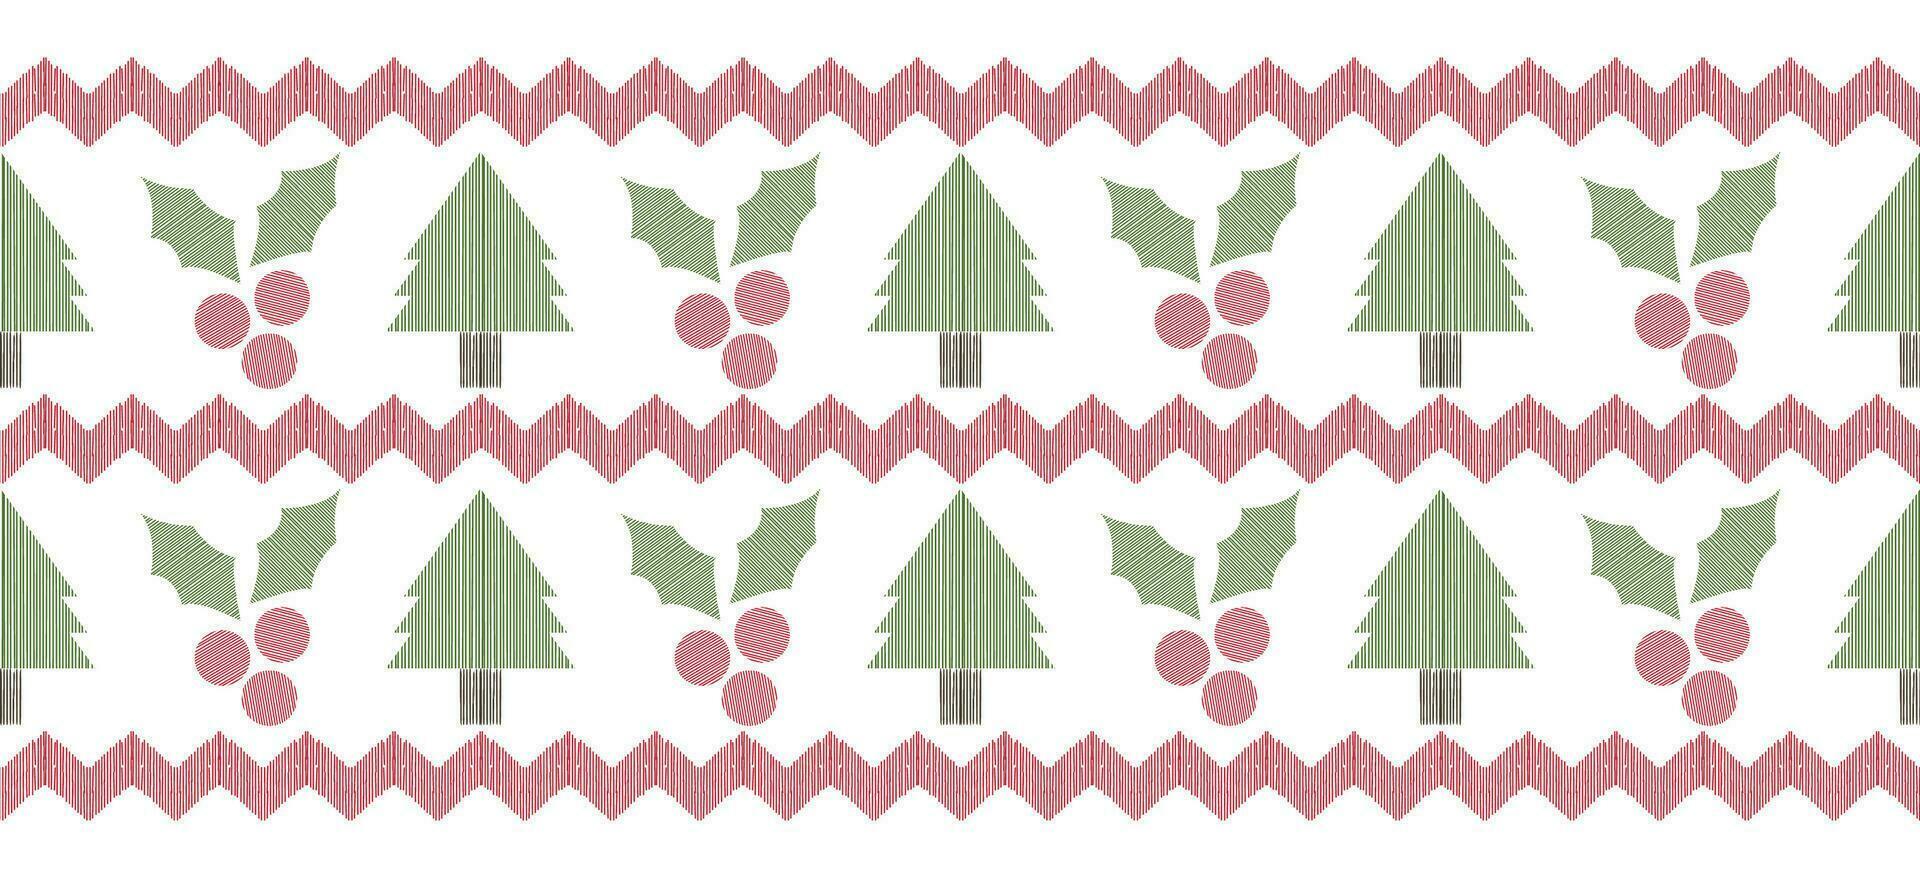 Motif Christmas tree ethnic handmade  Ikat art. Christmas background. folk embroidery Christmas pattern, geometric art ornament print. red, green, white colors. snowflake, star, poinsettia design. vector